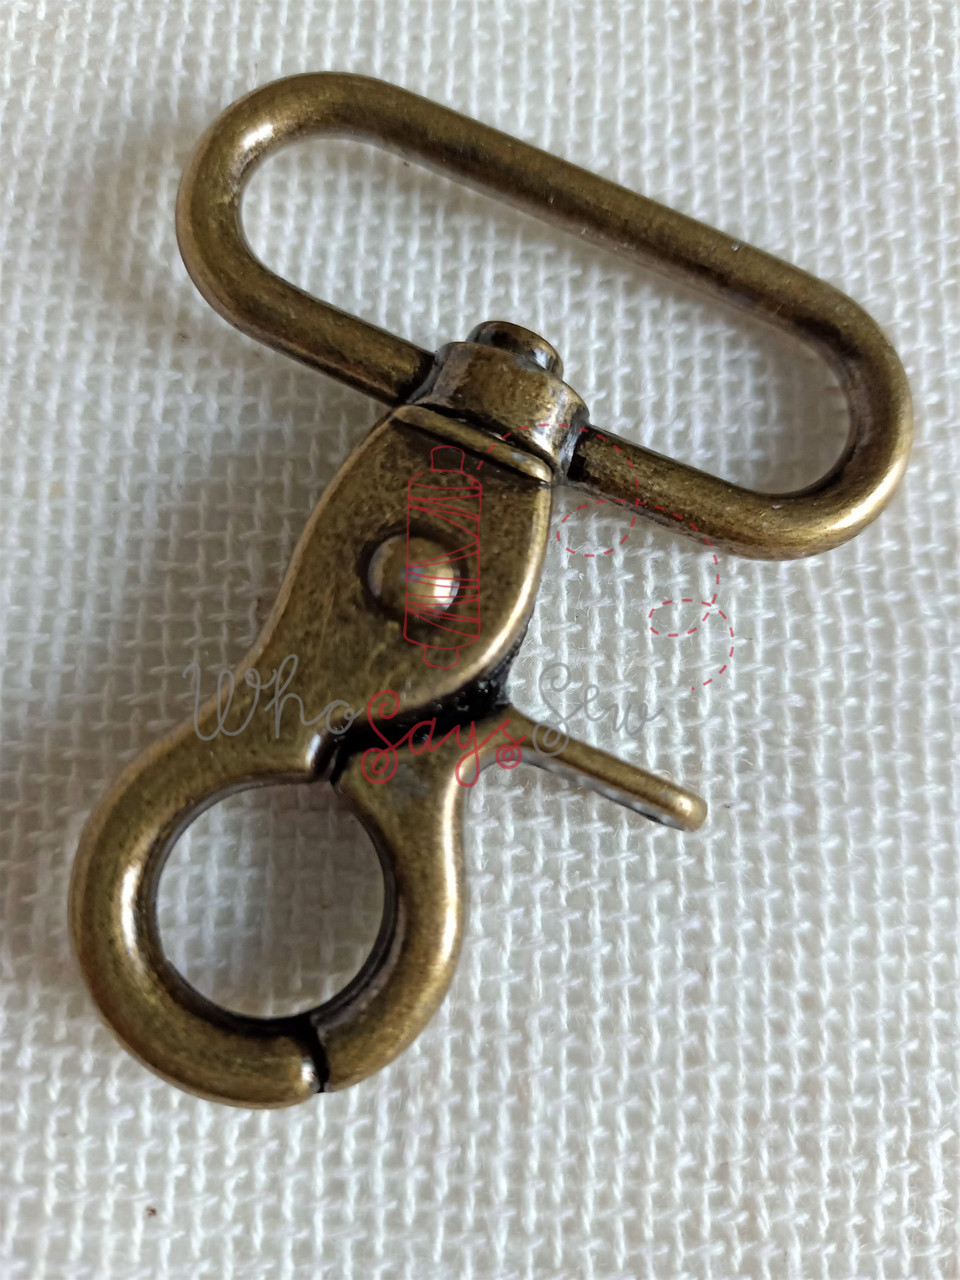 2x Wide Open 3.8cm (1.5) Swivel Snap Hooks in Antique Brass - Who Says Sew